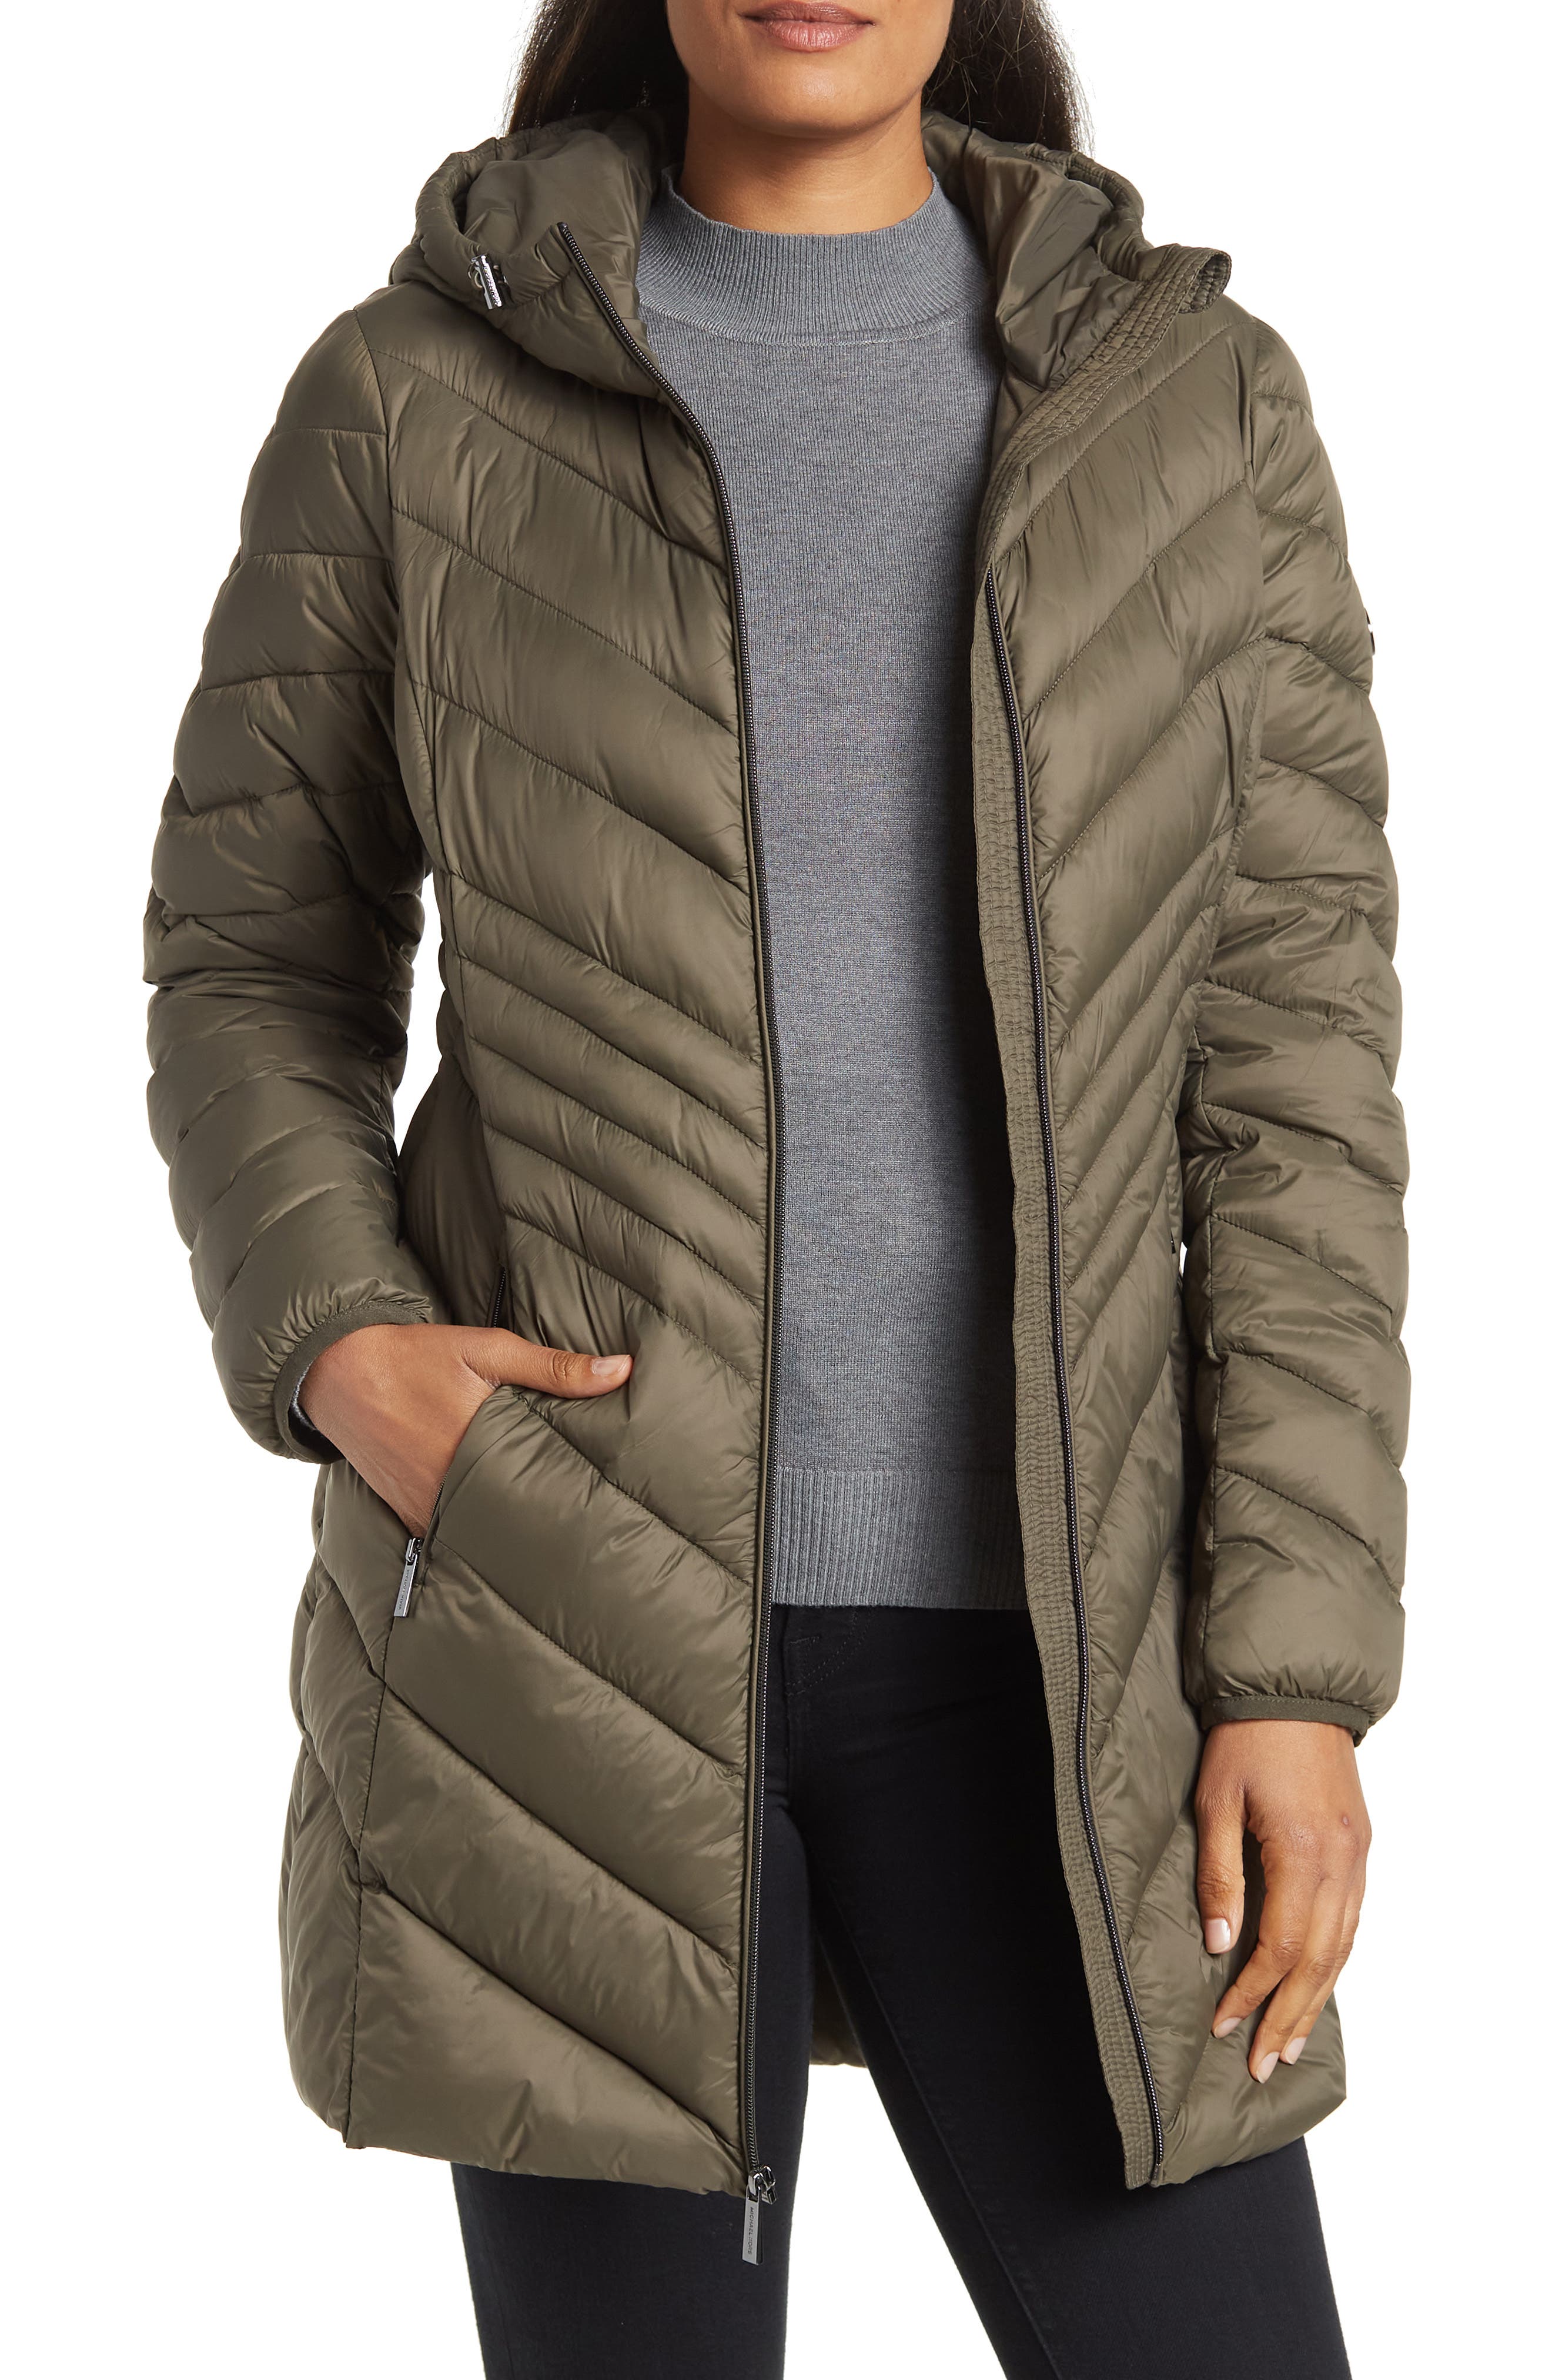 K.ZELL Puffer jacket discount 66% Brown L WOMEN FASHION Coats Puffer jacket Print 